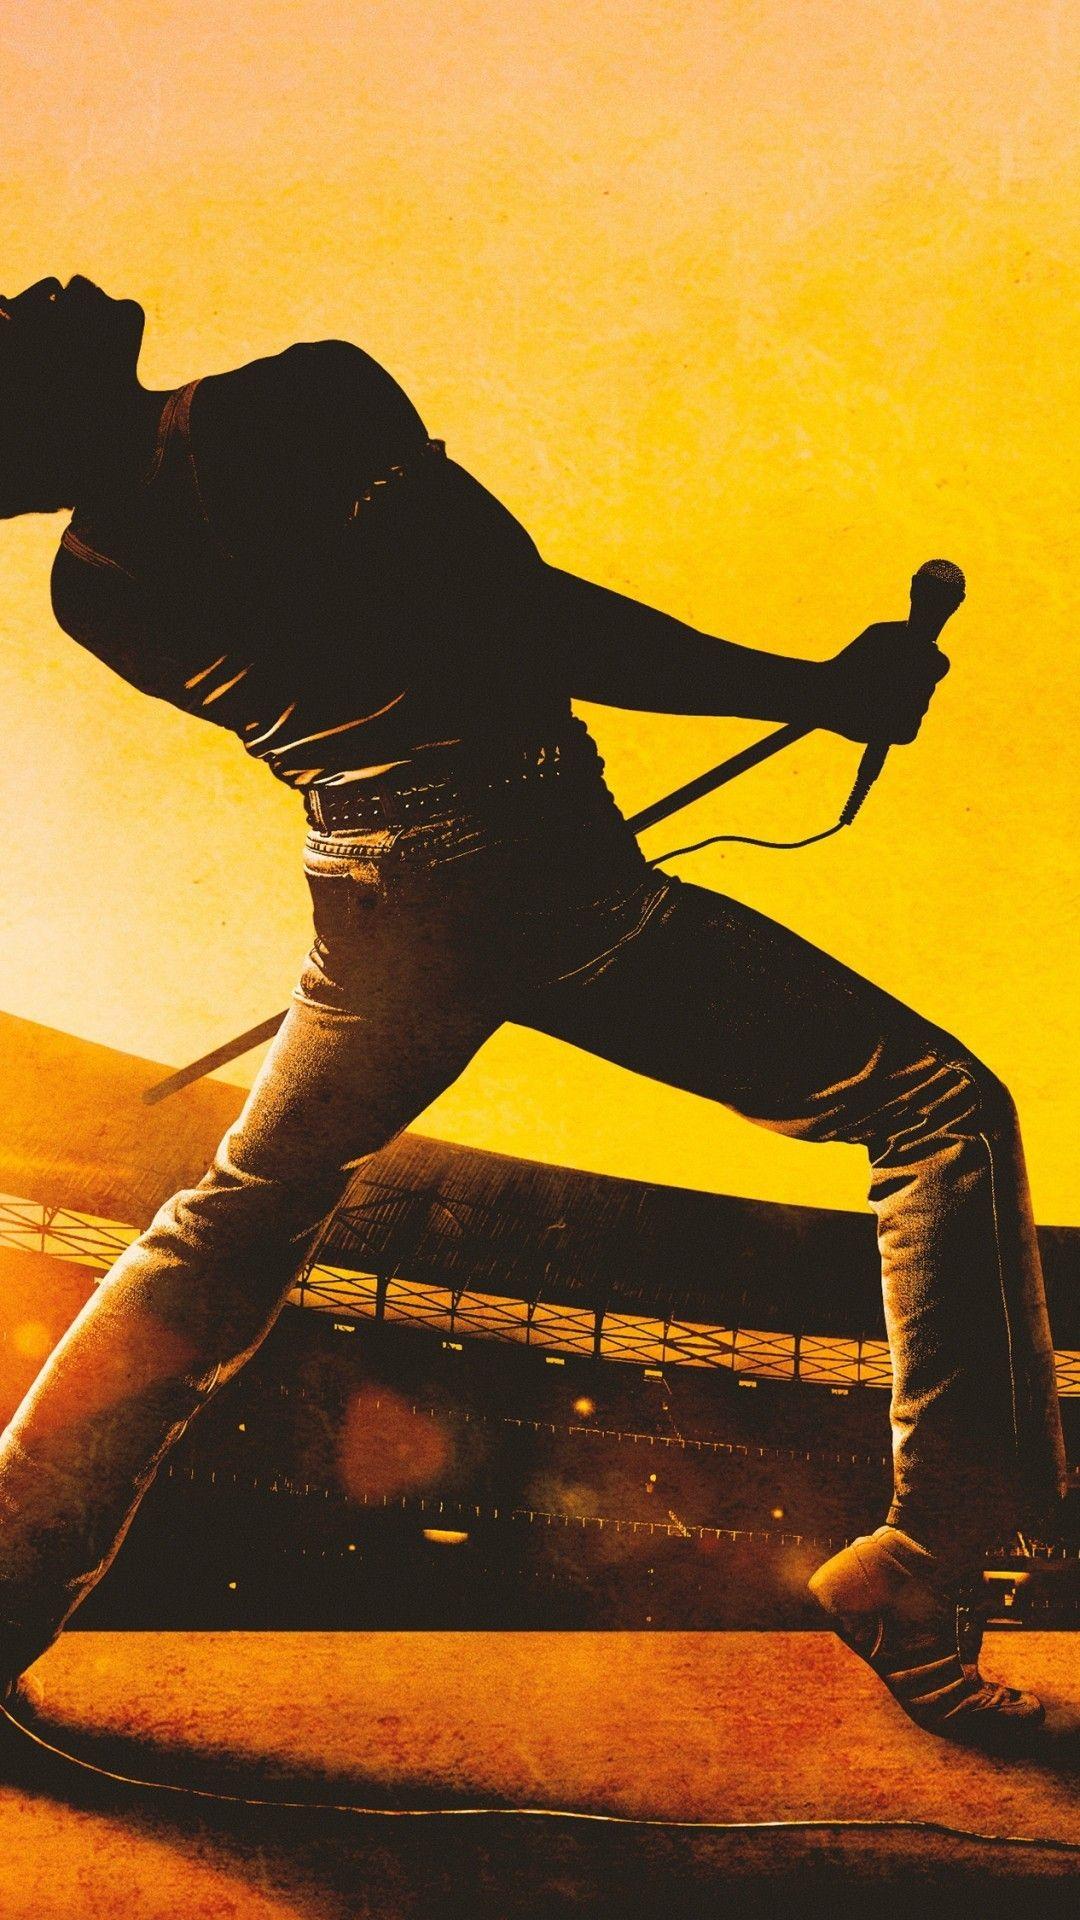 Bohemian Rhapsody Wallpapers - Top Free Bohemian Rhapsody Backgrounds